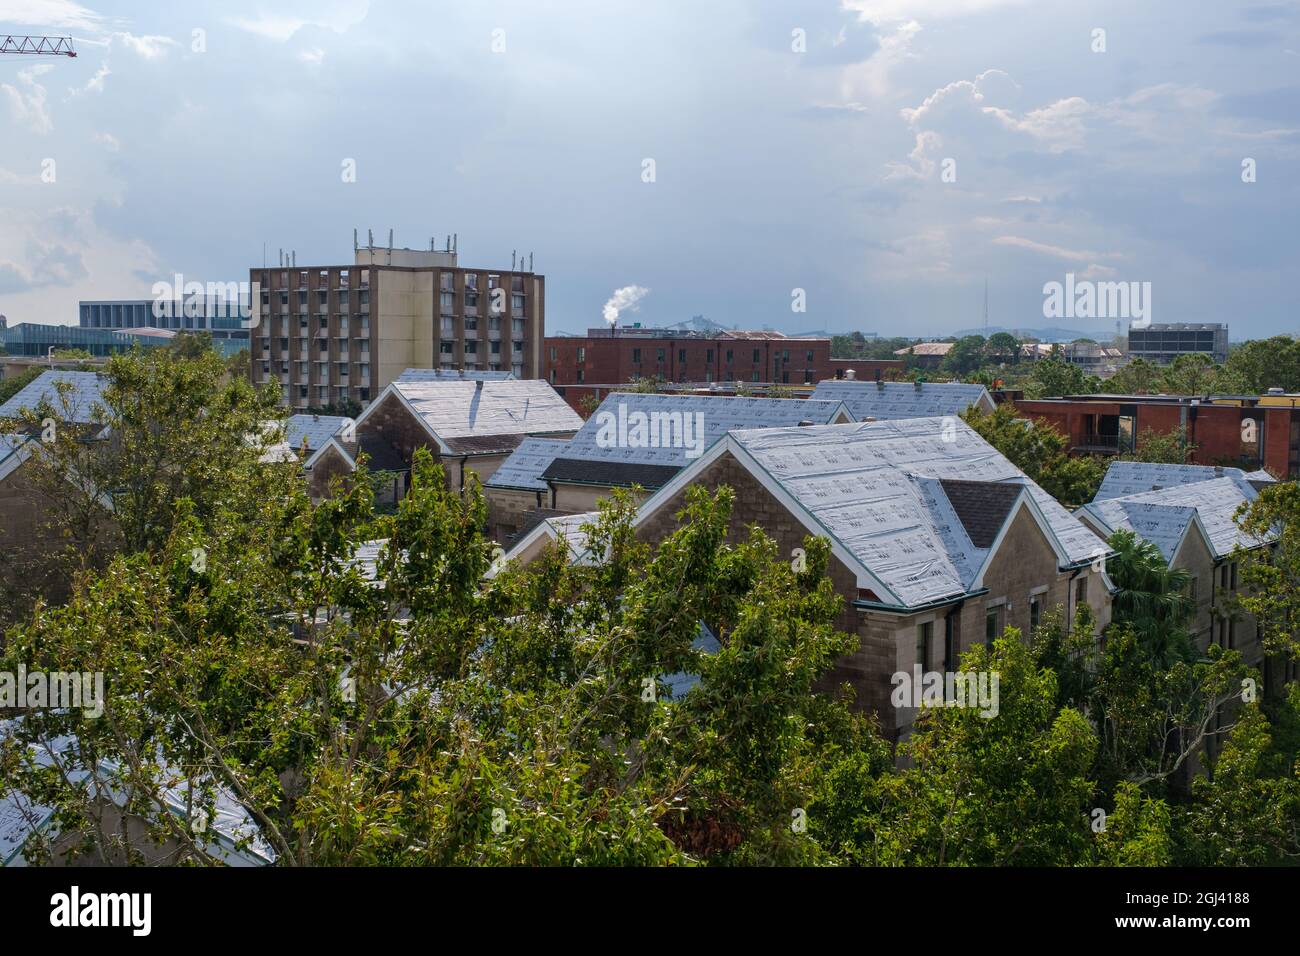 NEW ORLEANS, LA, USA - SEPTEMBER 7, 2021: Plastic Covered Roofs of Hurricane Ida Damaged Buildings at Tulane University Stock Photo